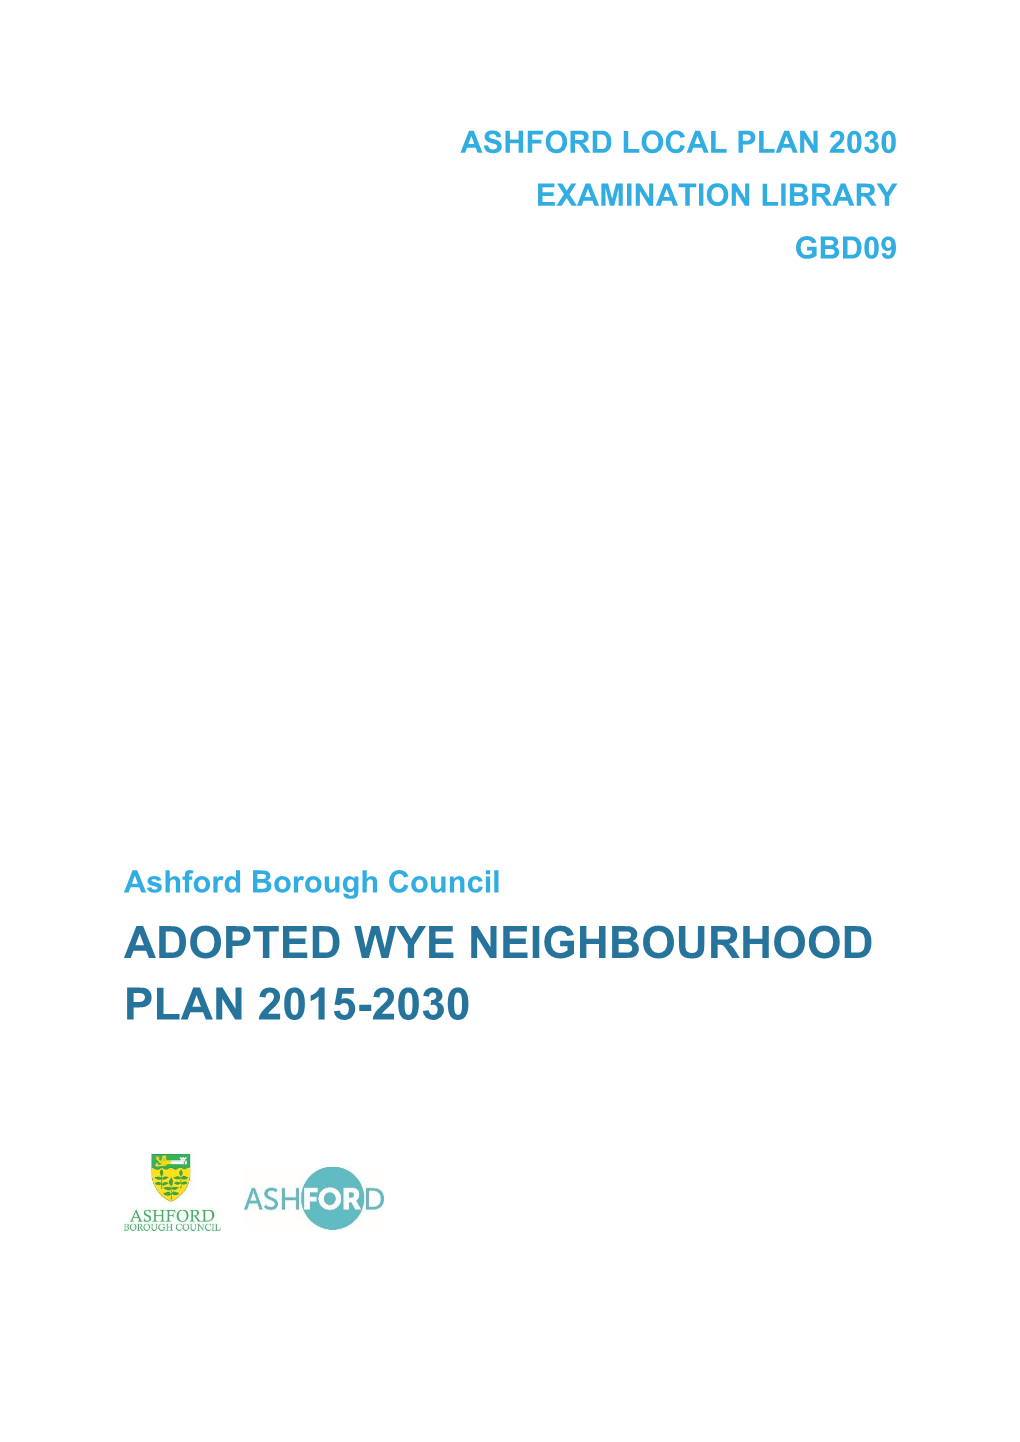 Adopted Wye Neighbourhood Plan 2015-2030